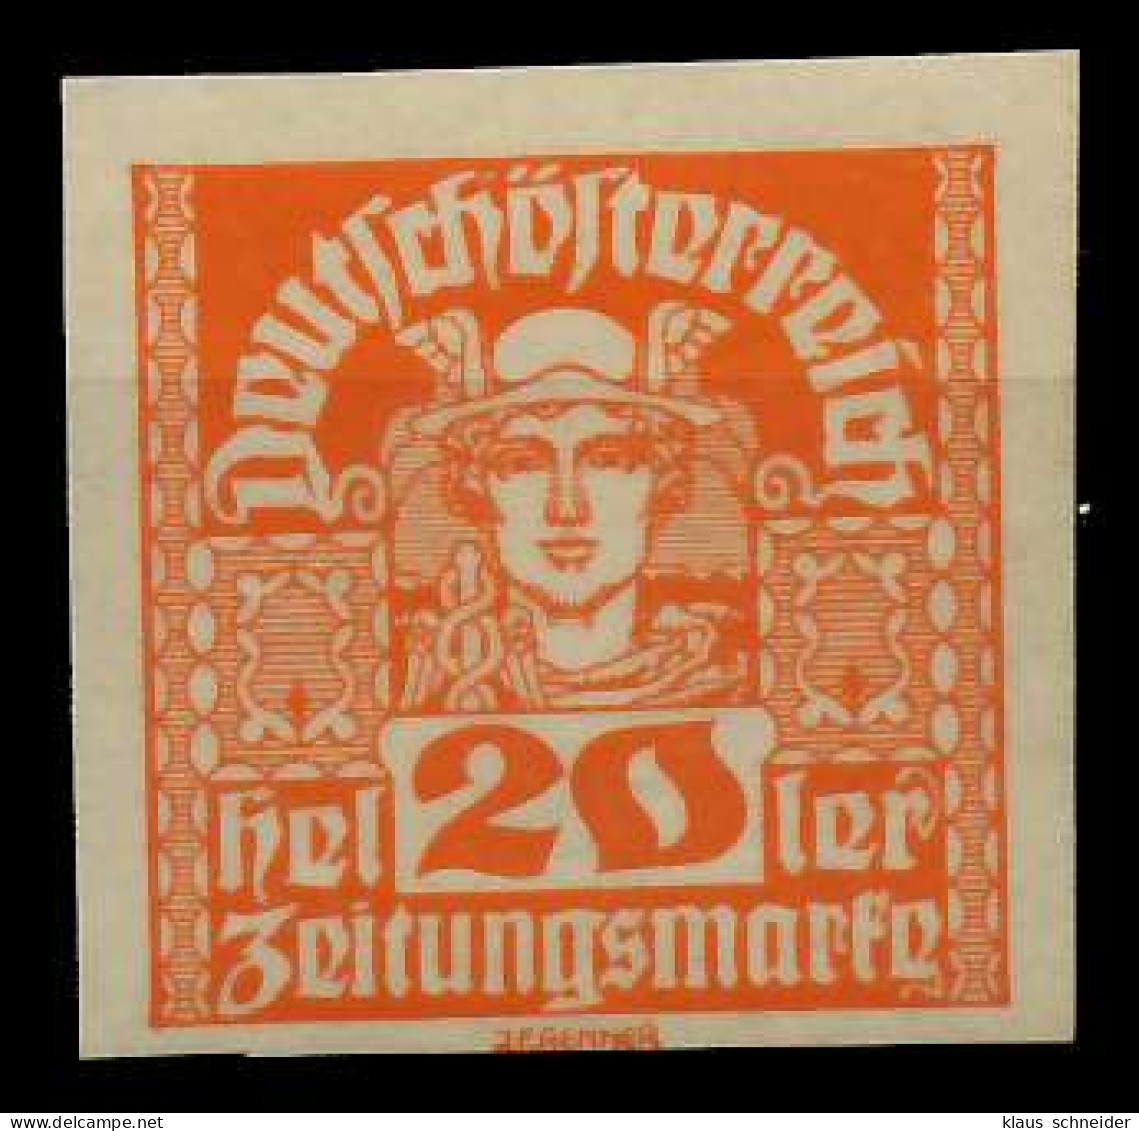 ÖSTERREICH 1920 21 ZEITUNGSMARKEN Nr 303x Postfrisch X7A88E6 - Newspapers